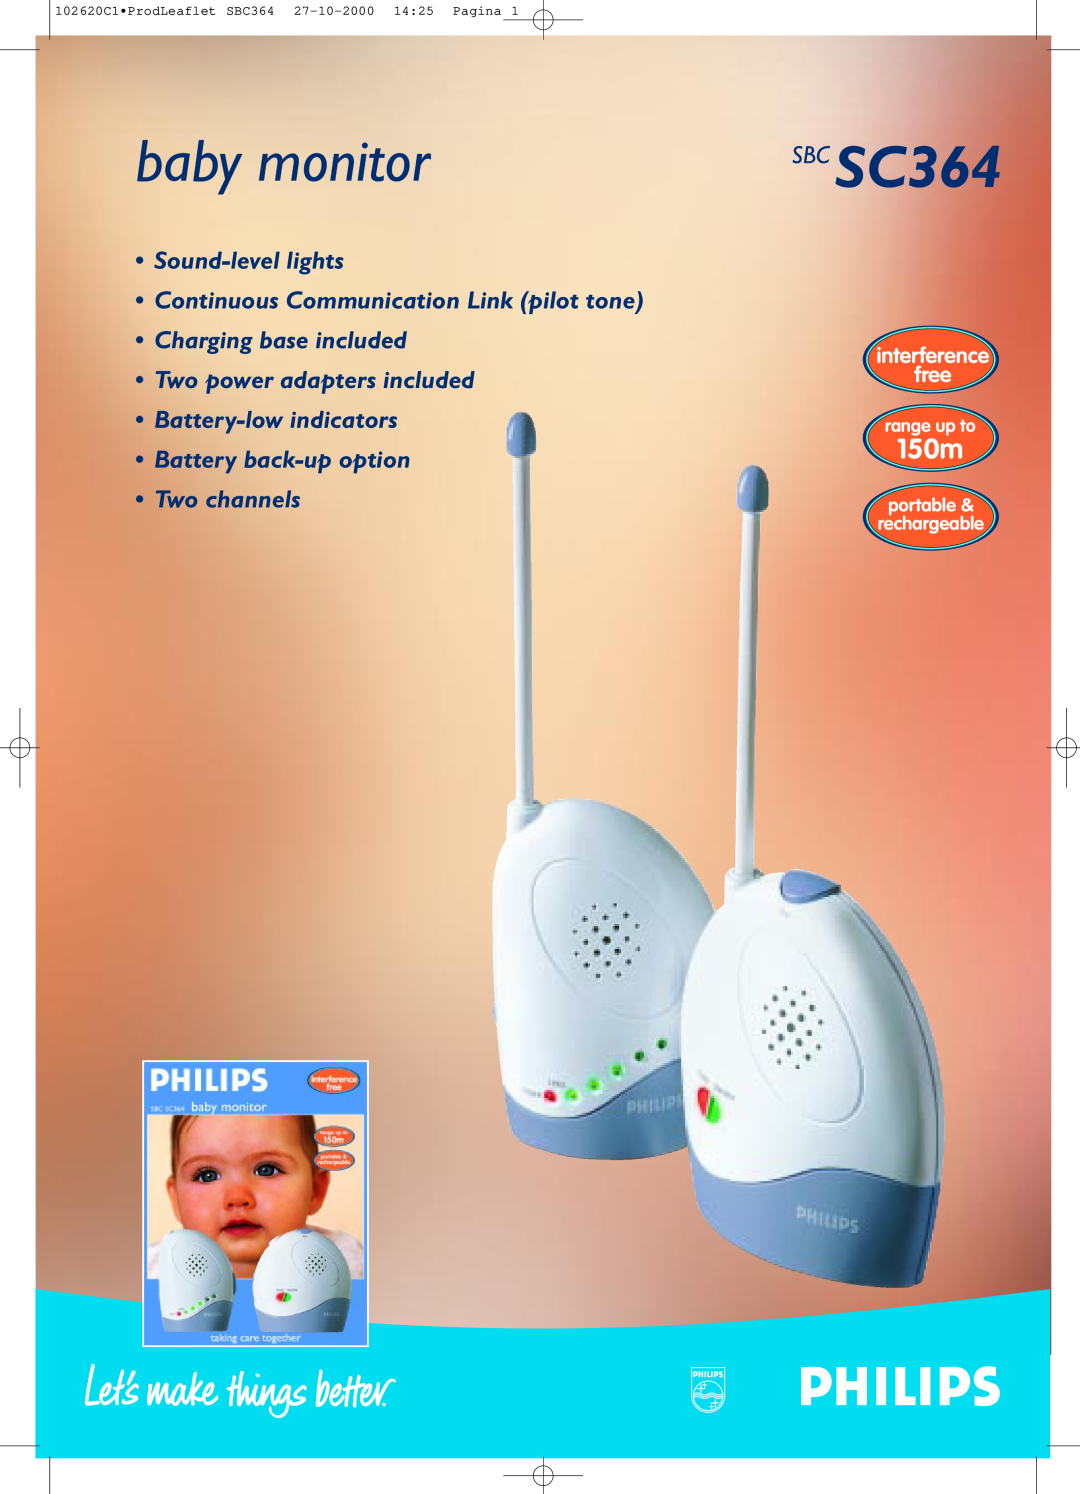 Philips manual 102620C1ProdLeaflet SBC364 27-10-2000 1425 Pagina, baby monitor, SBC SC364, 150m, interference free 